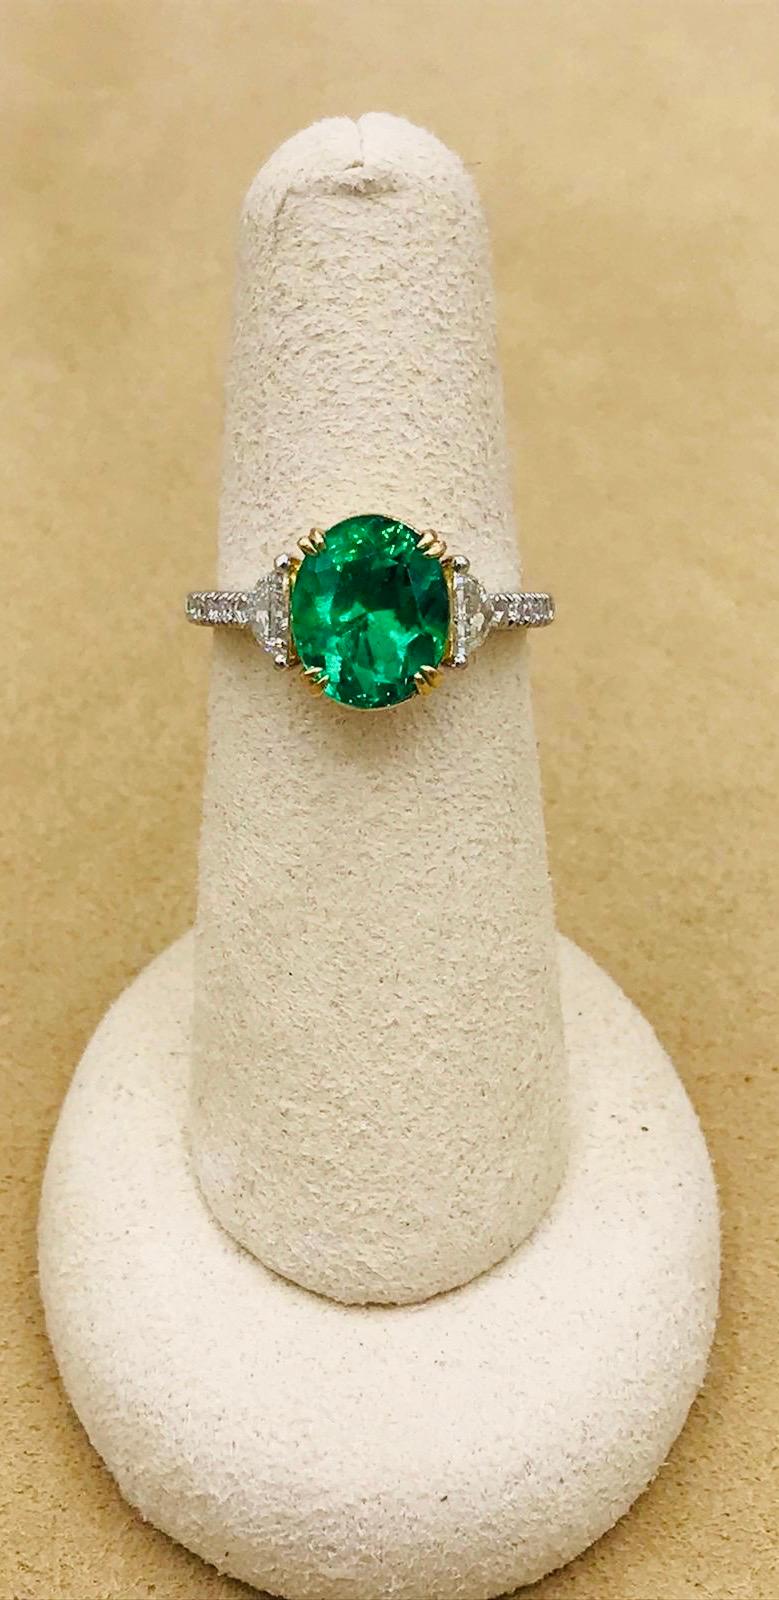 Emilio Jewelry Certified 3.82 Carat Colombian Emerald Diamond Ring 7